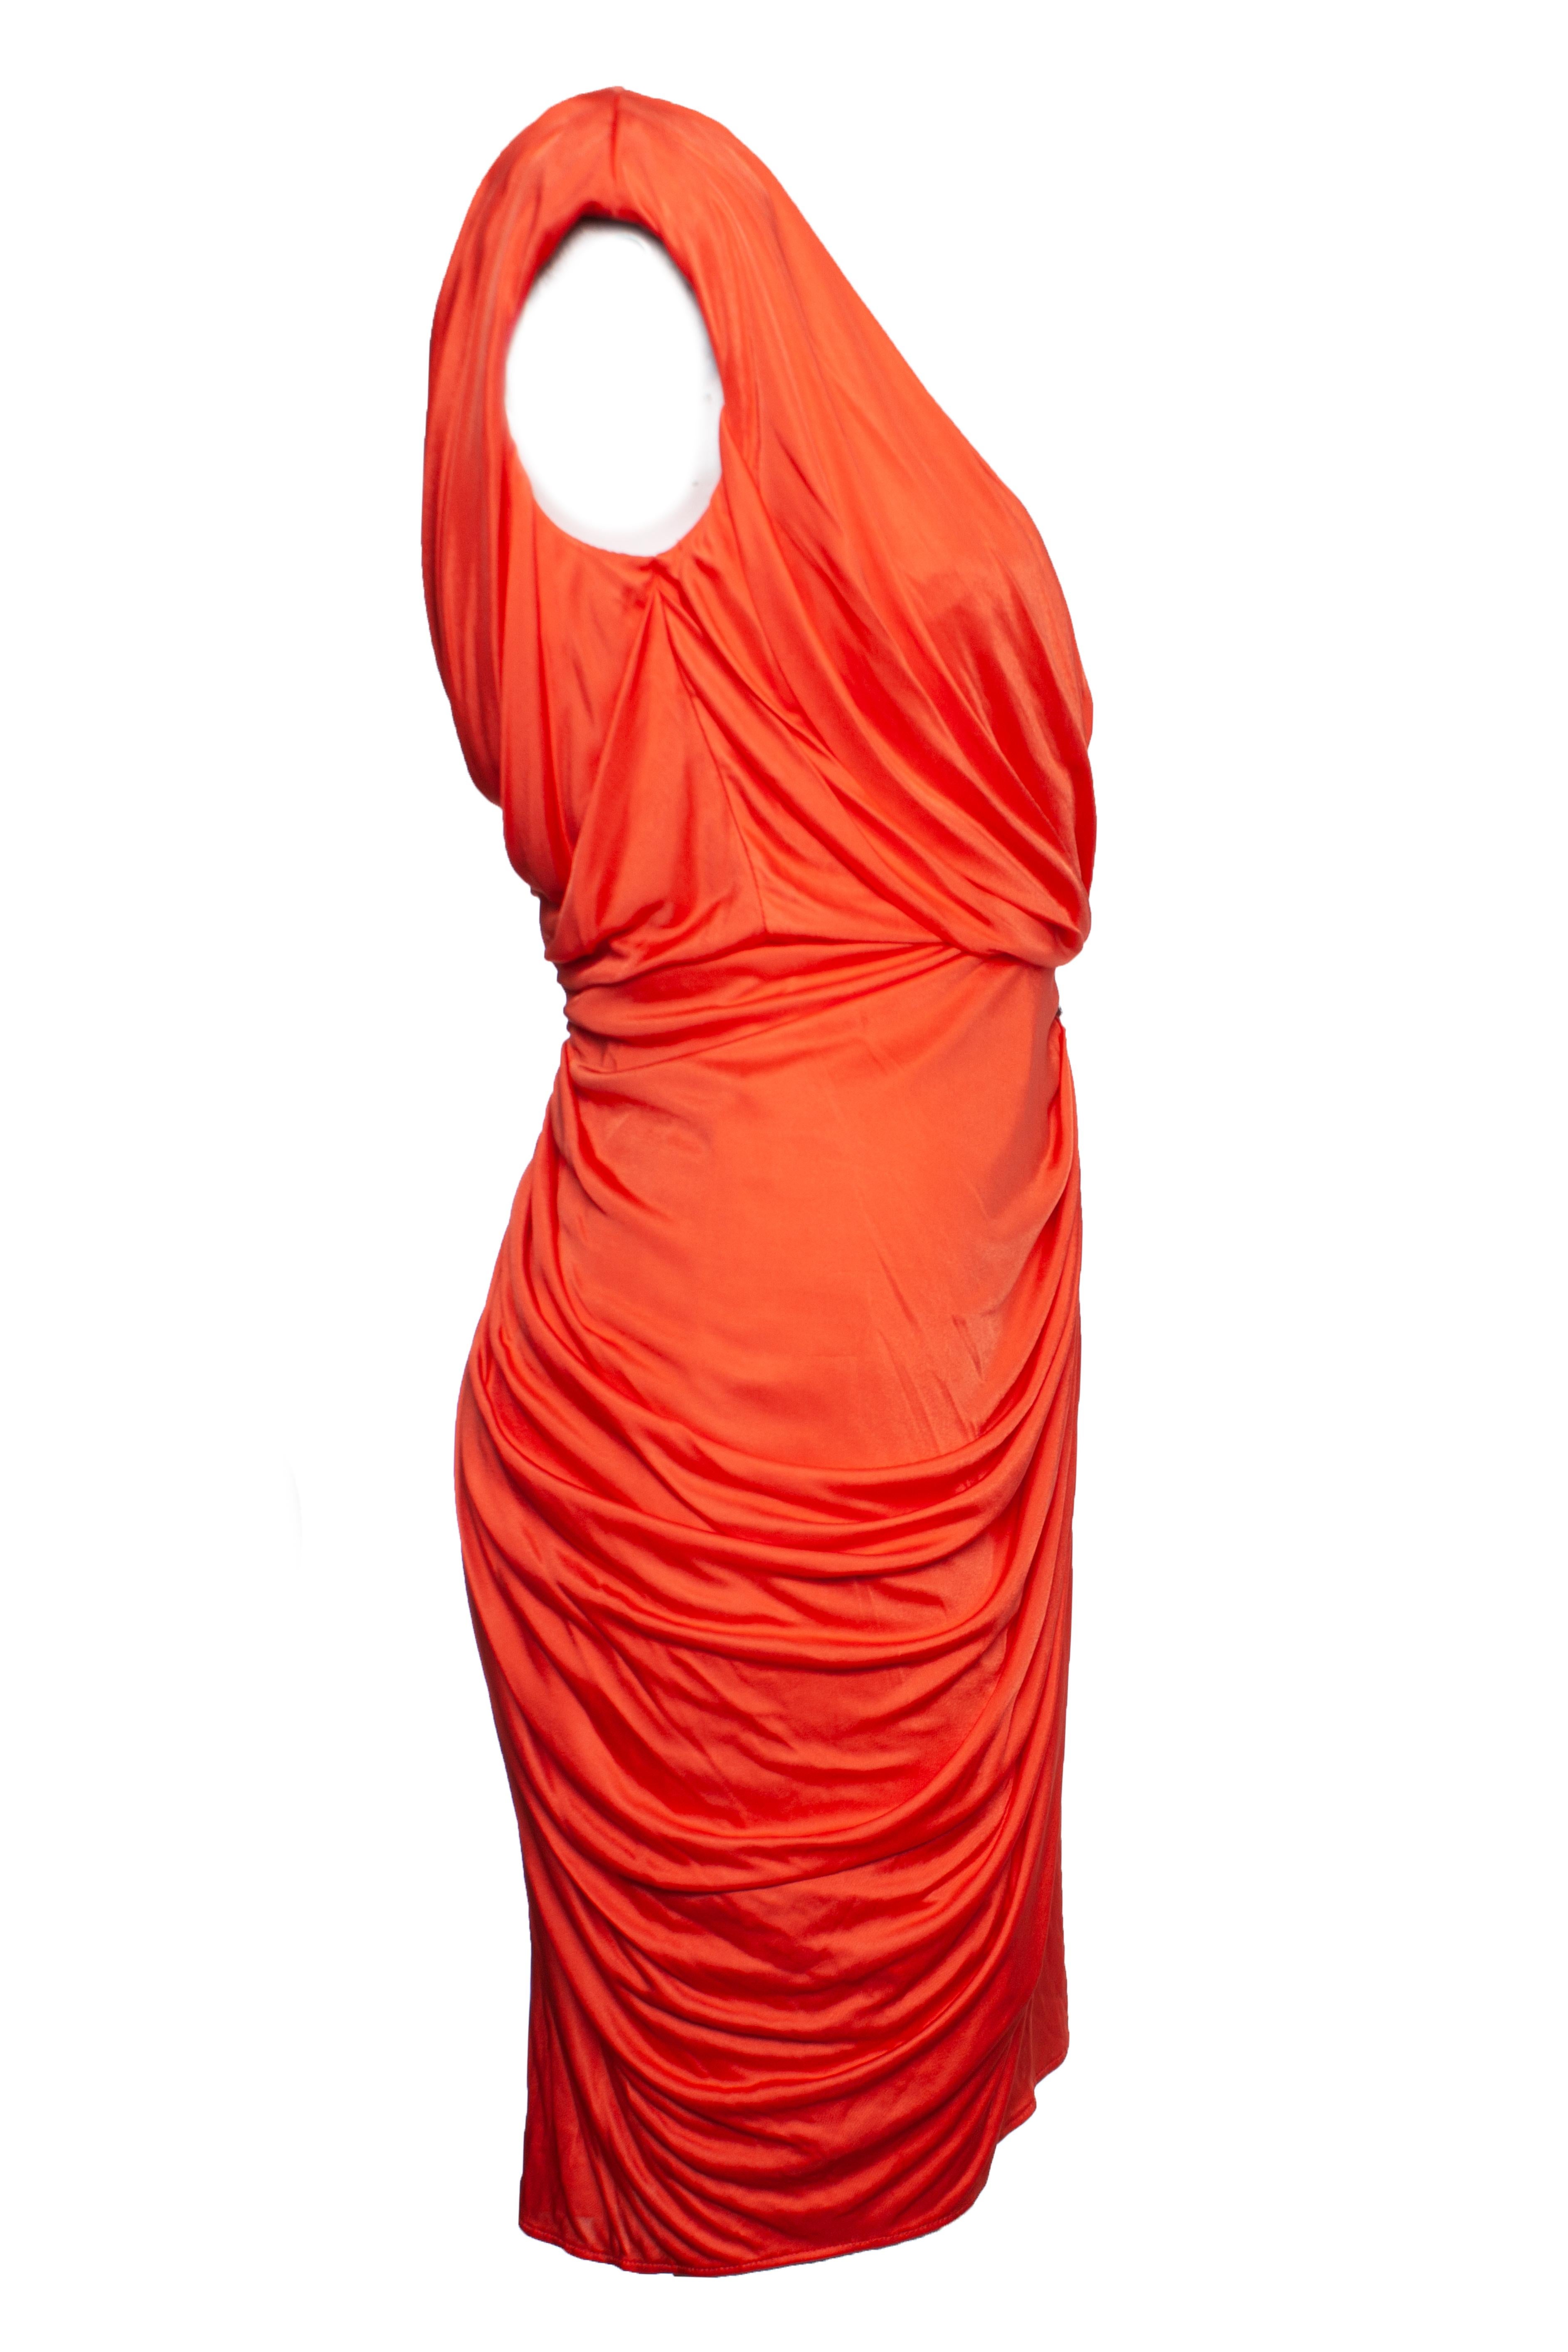 Blumarine, Orange draped dress In Excellent Condition For Sale In AMSTERDAM, NL